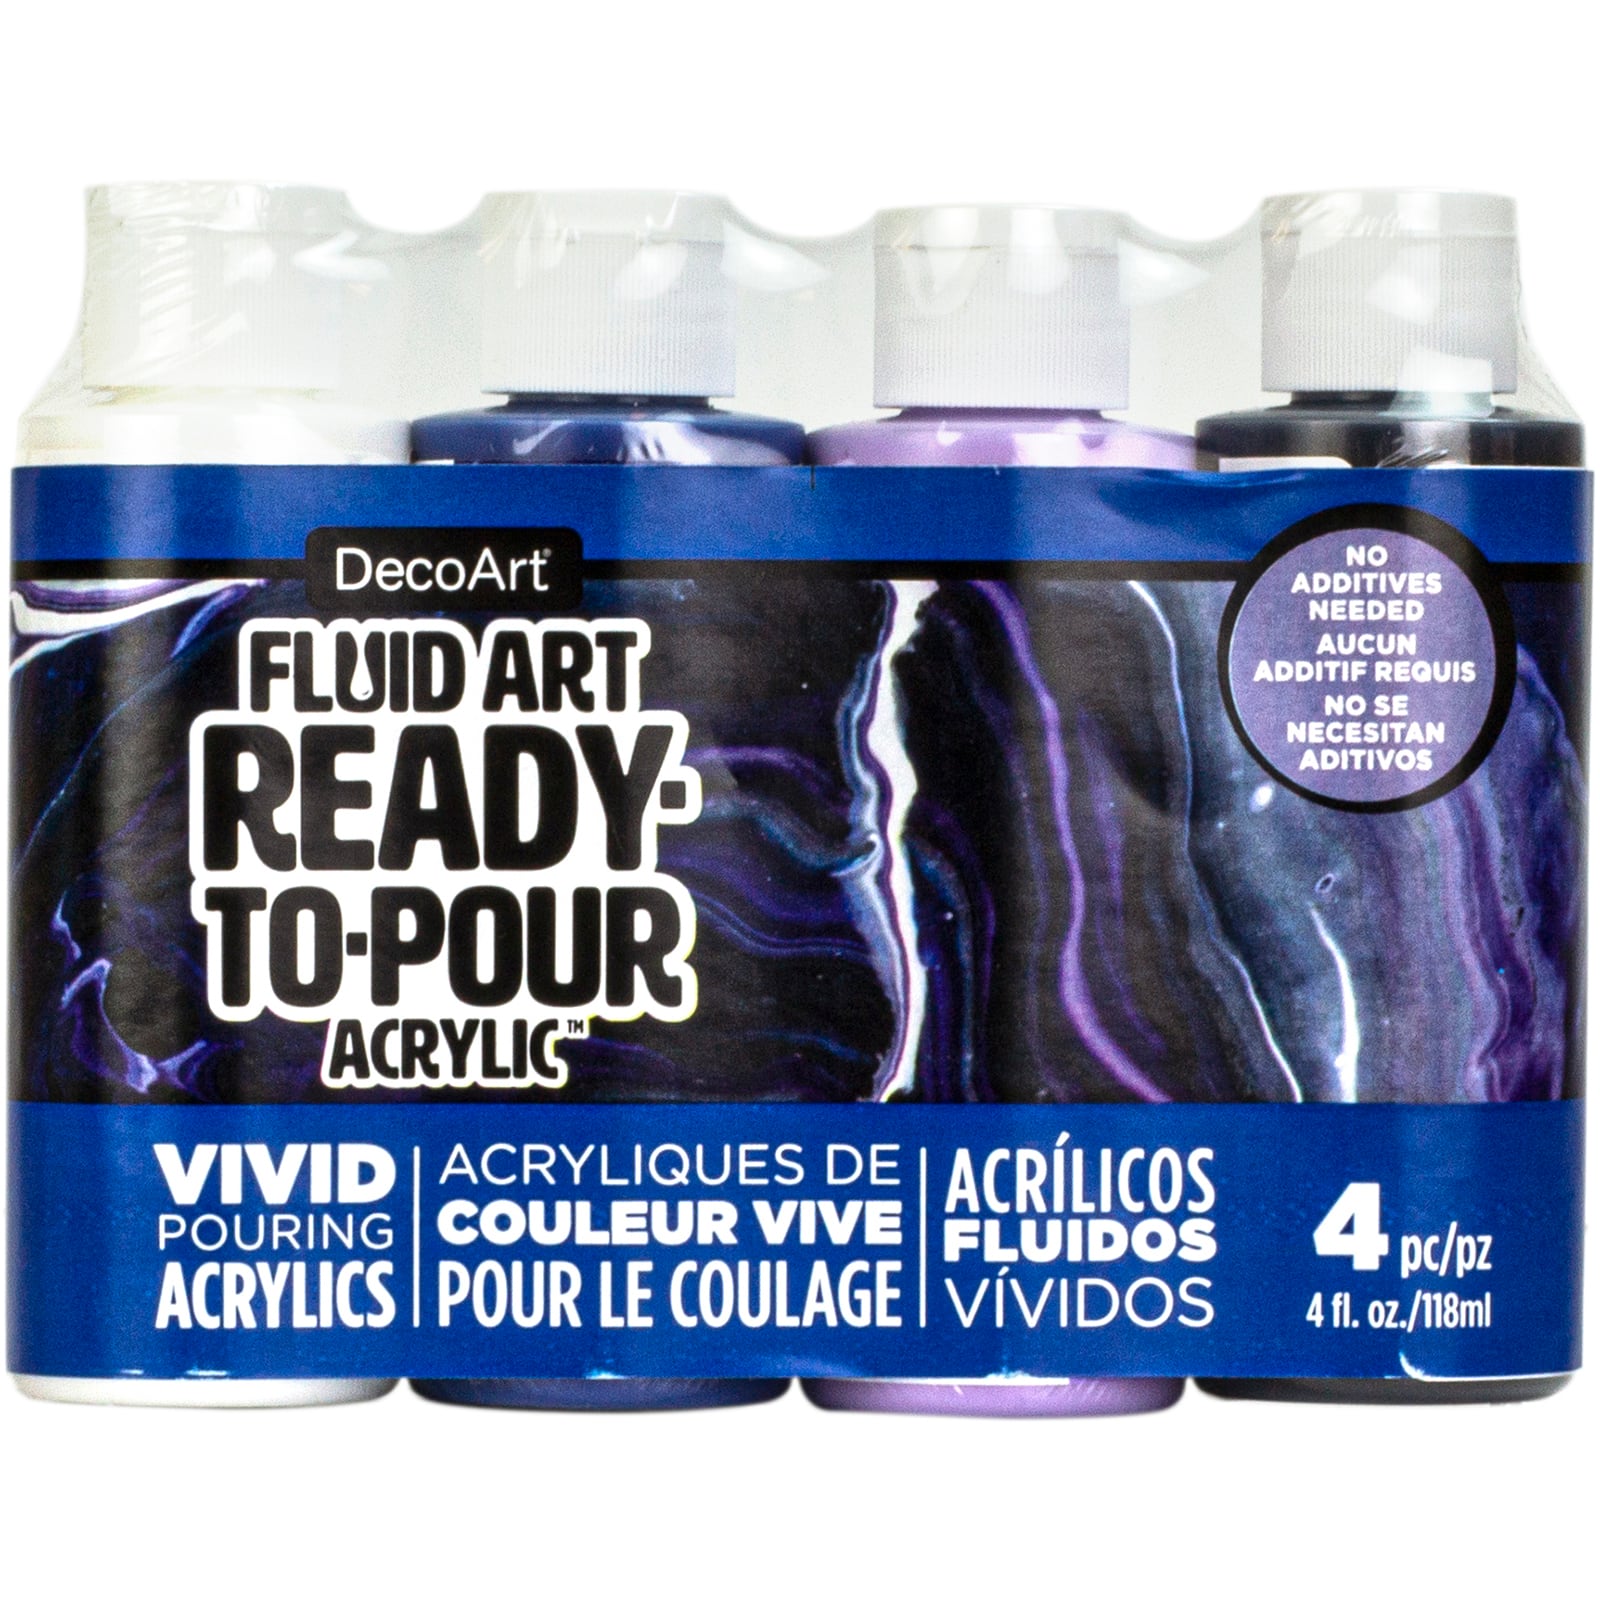 DecoArt&#xAE; Fluid Art Ready-to-Pour Acrylic&#x2122; Galactic